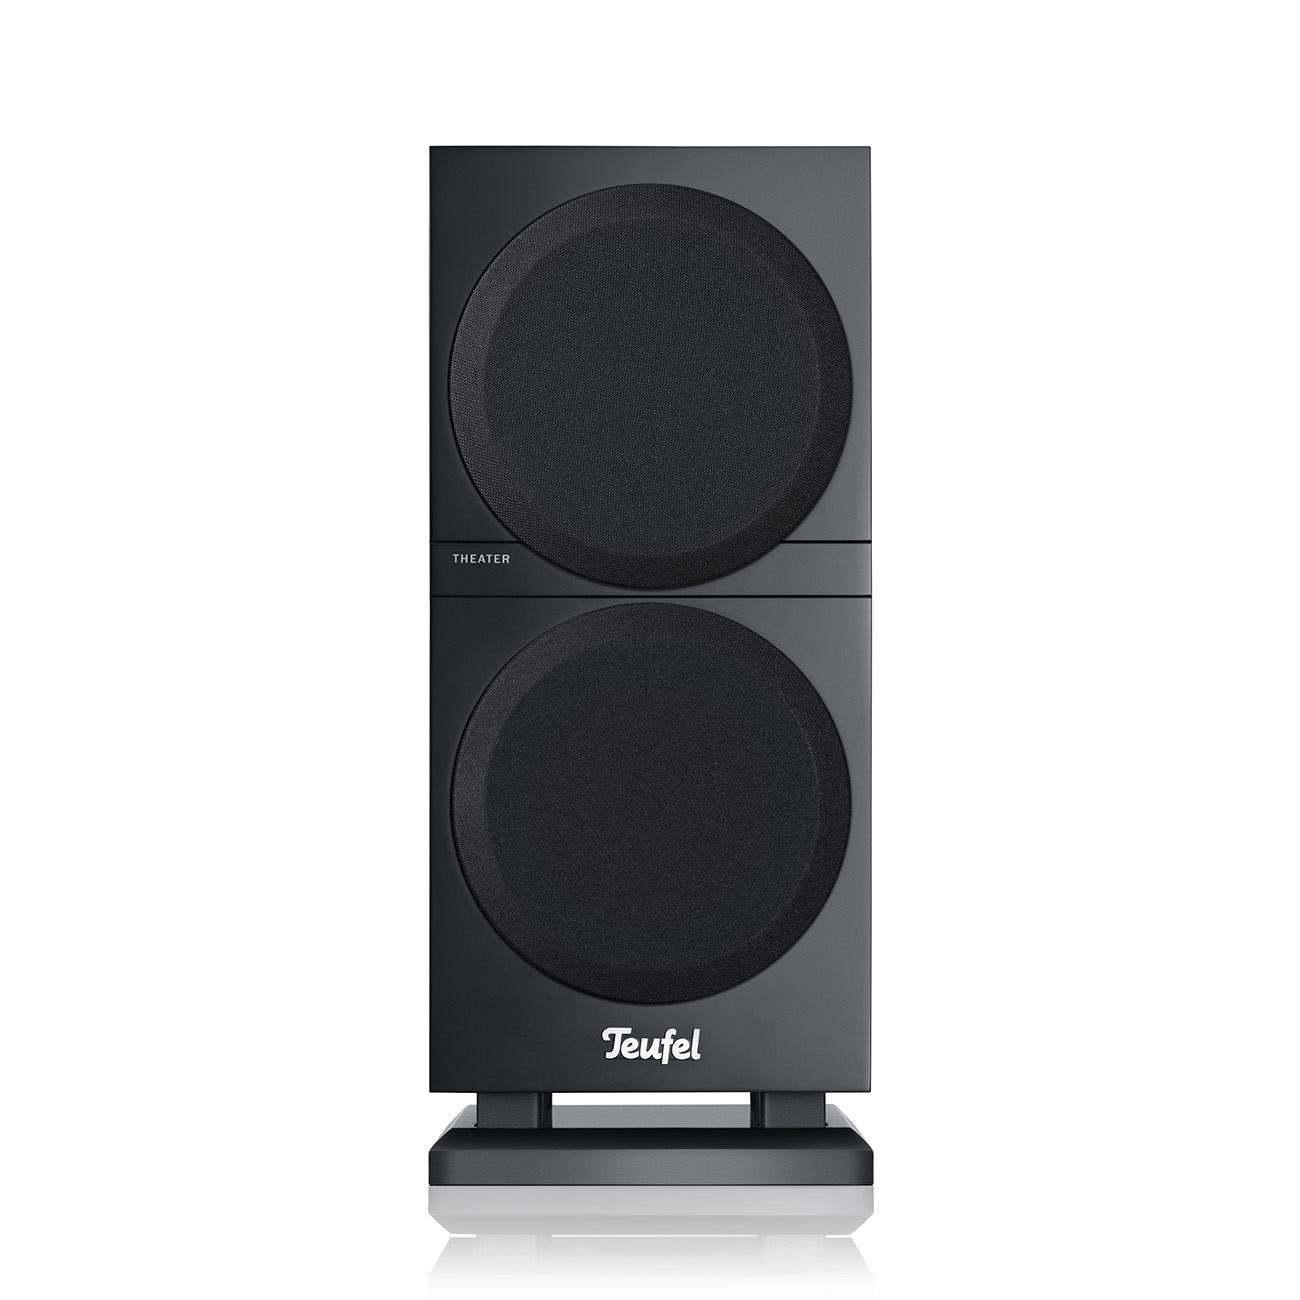 TEUFEL THEATER 500S Stereo-Regallautsprecher Passiv-Lautsprecher, Schwarz